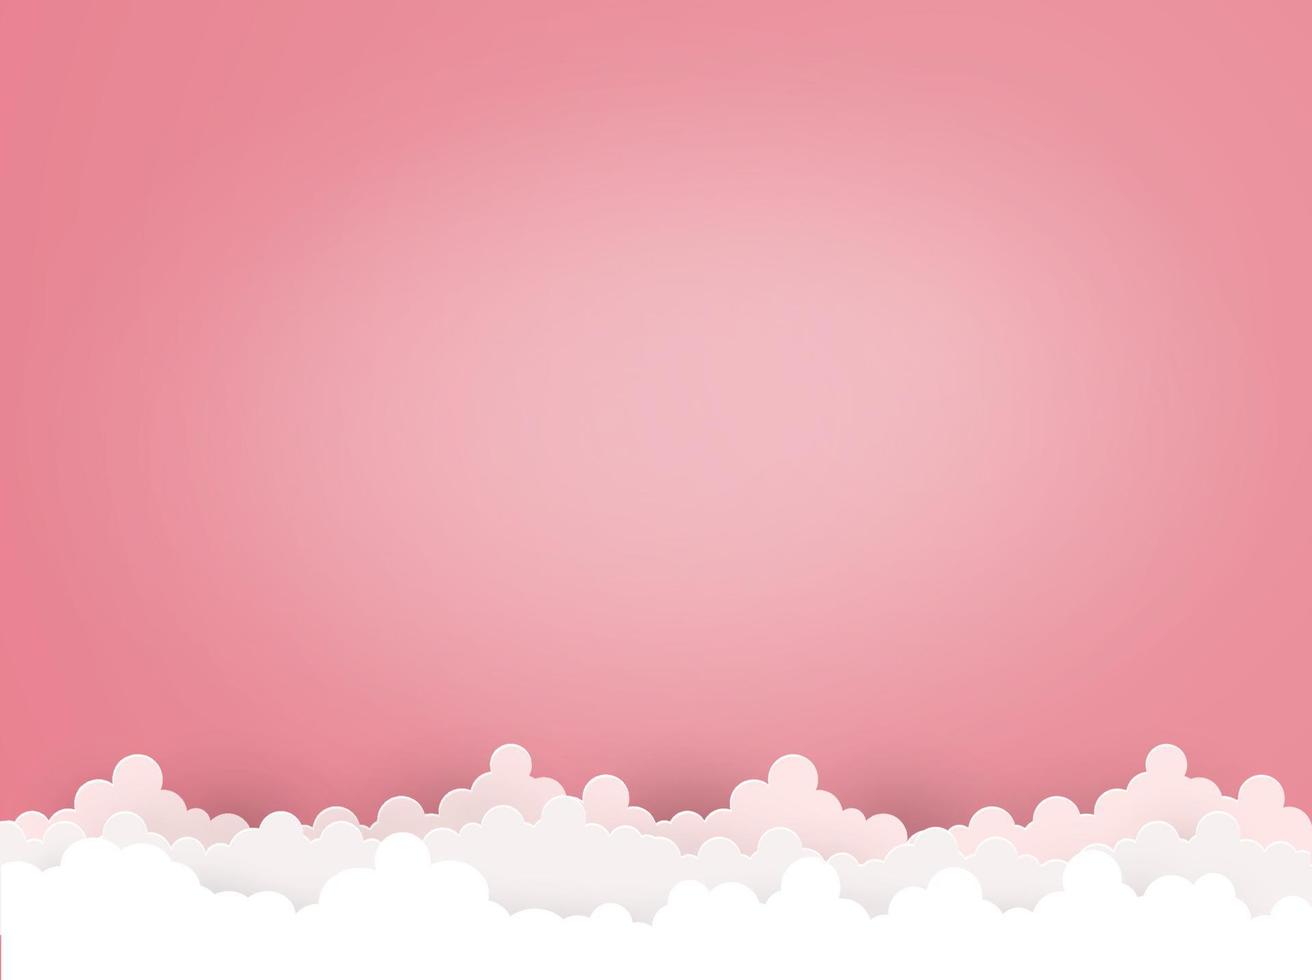 Cloud on light Red  background  Paper art Style.vector design Element  IllustrationCloud on light Red  background  Paper art Style.vector design Element  Illustration vector